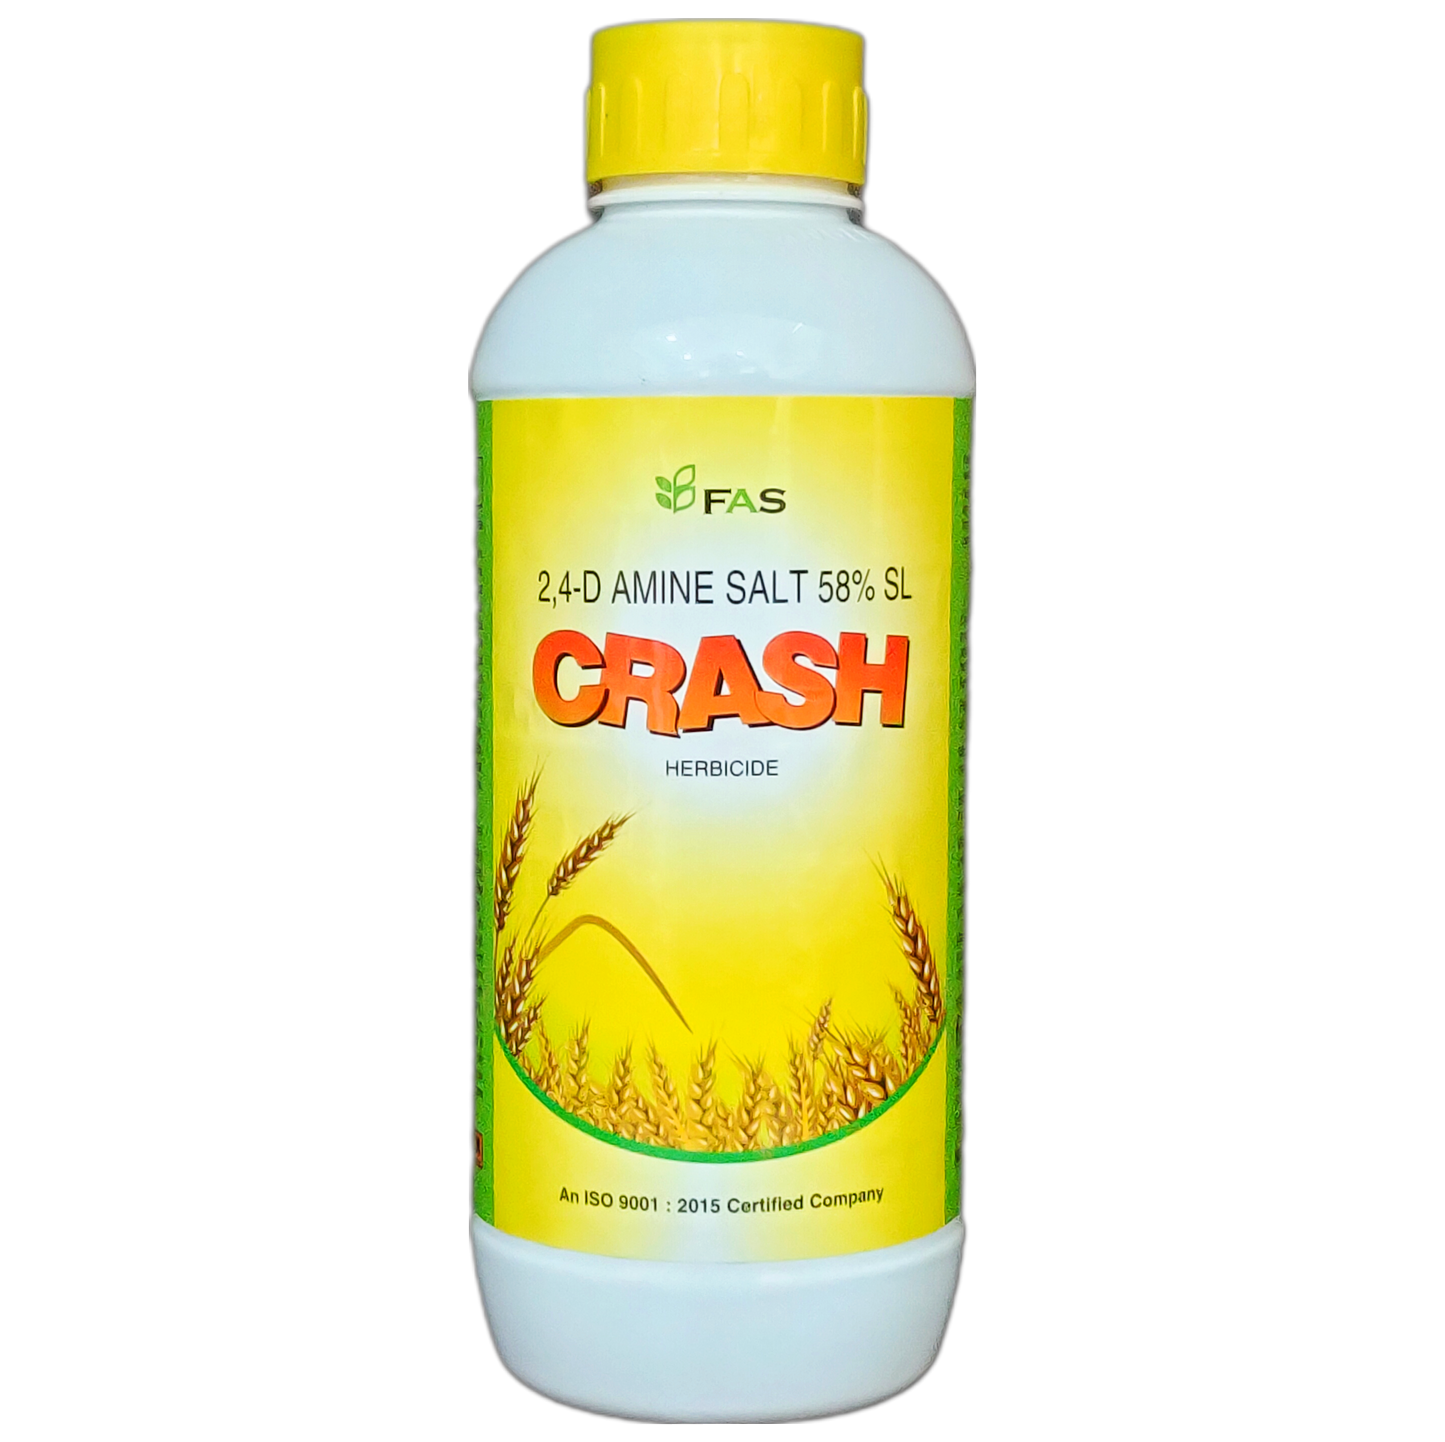 Crash - 2,4-D Amine Salt 58% SL Herbicide